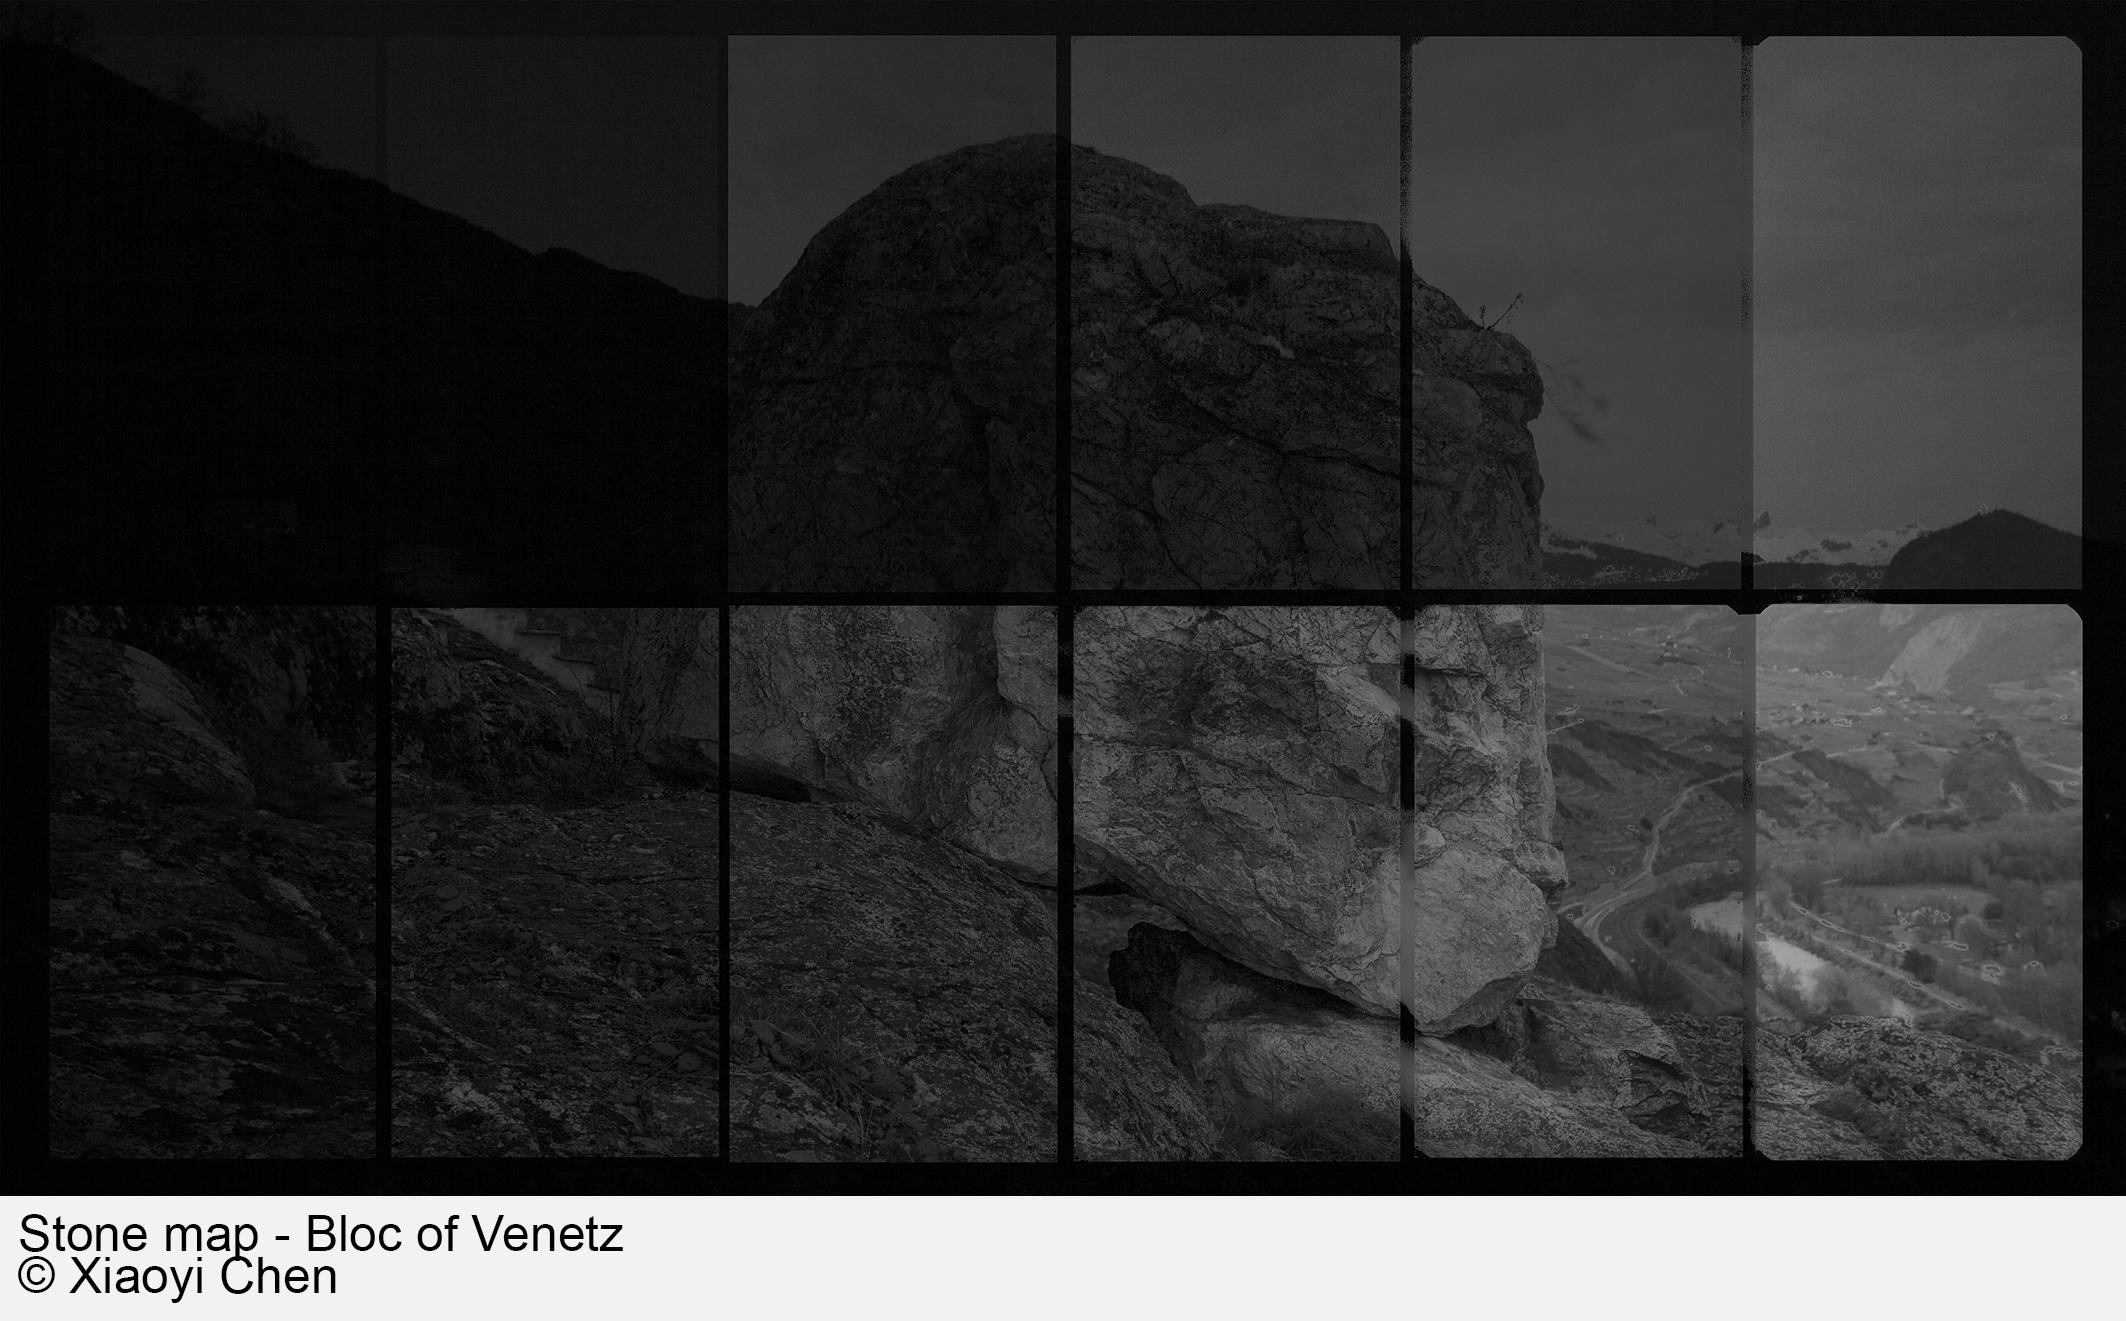 Stone map - Bloc of venetz